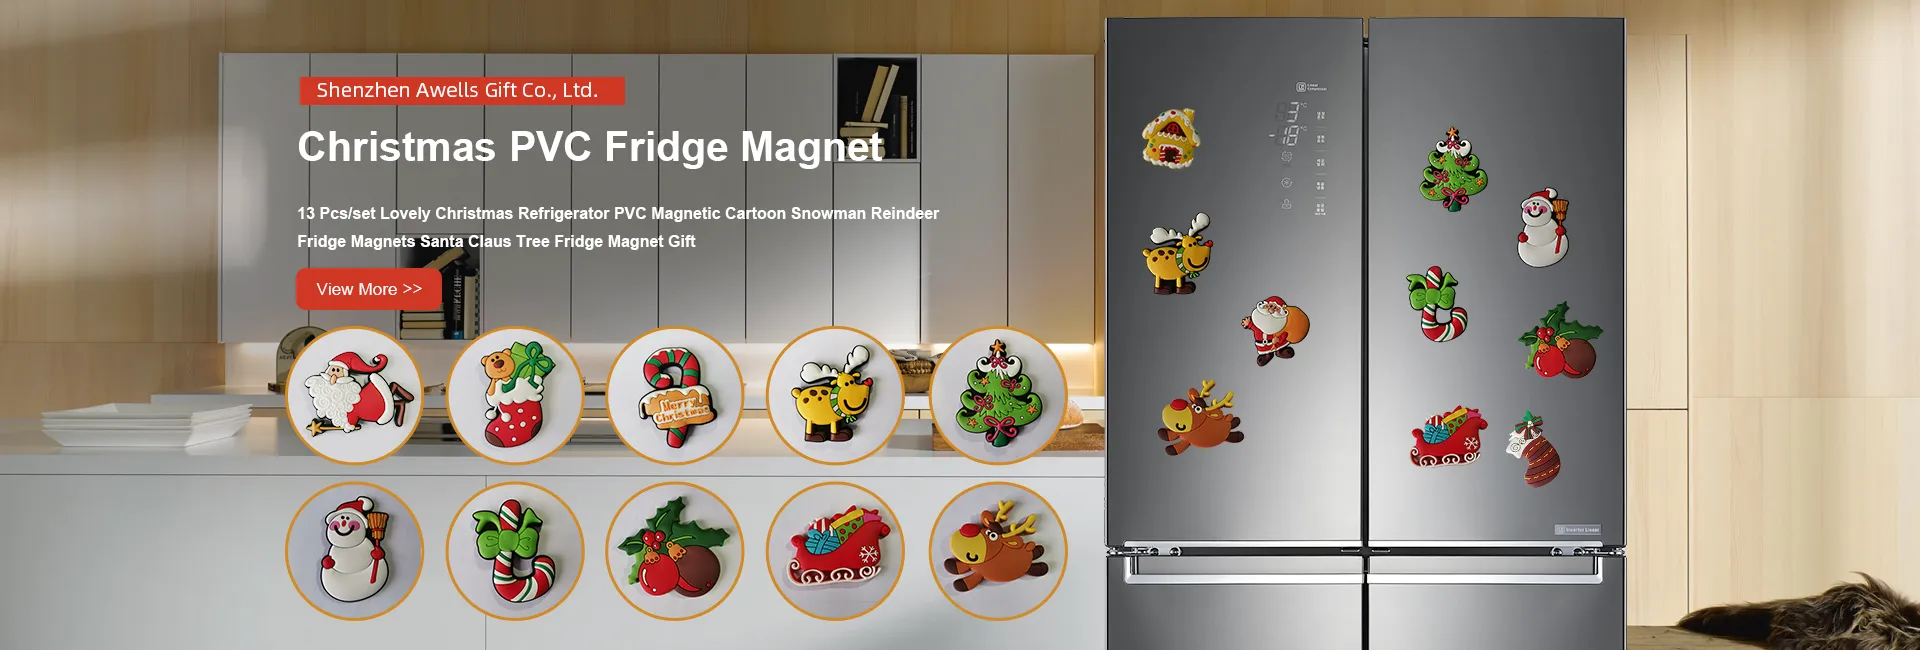 2d pvc fridge magnet